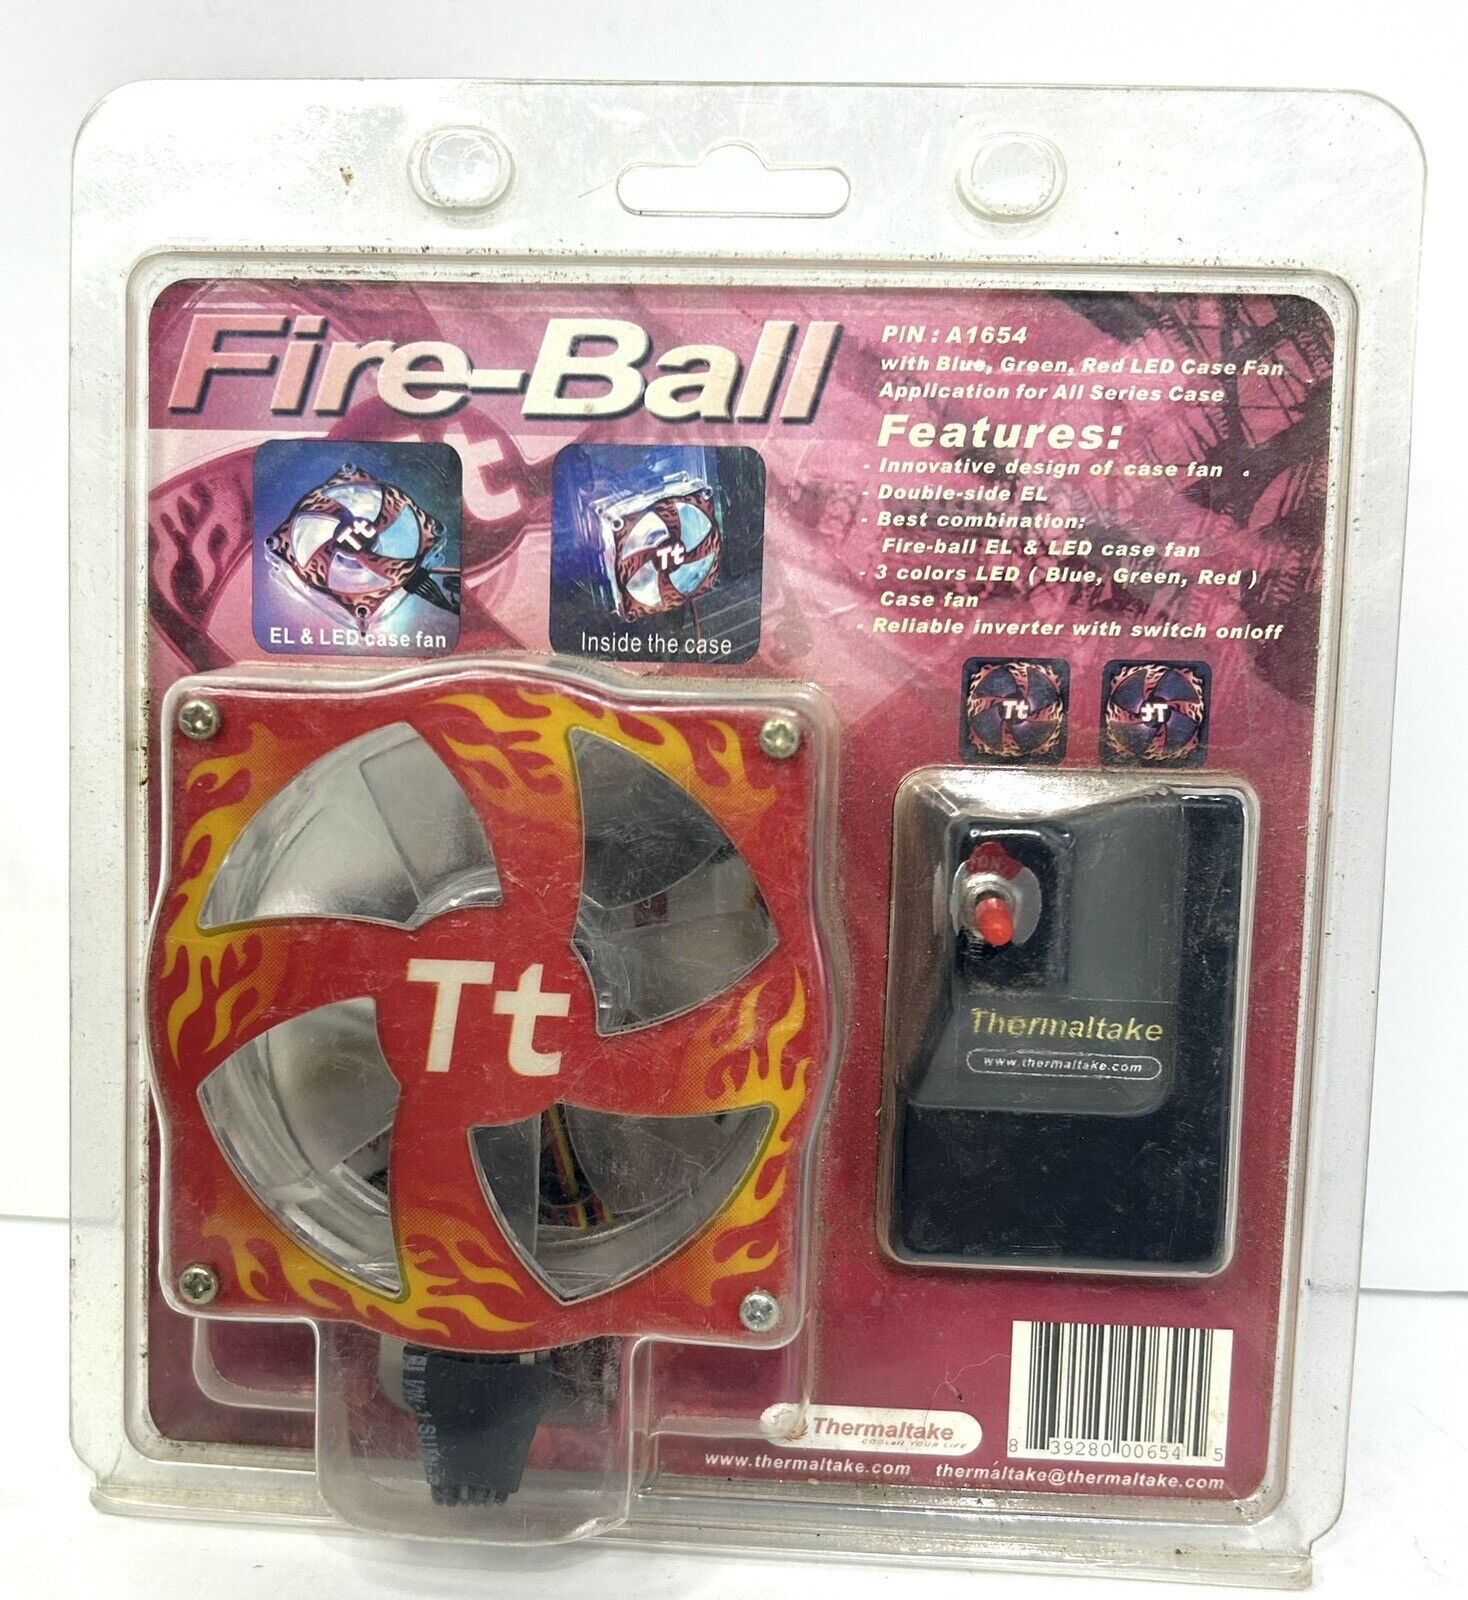 NEW Thermaltake Fireball 80mm EL & LED Fan Blue Green Red LEDs A1654